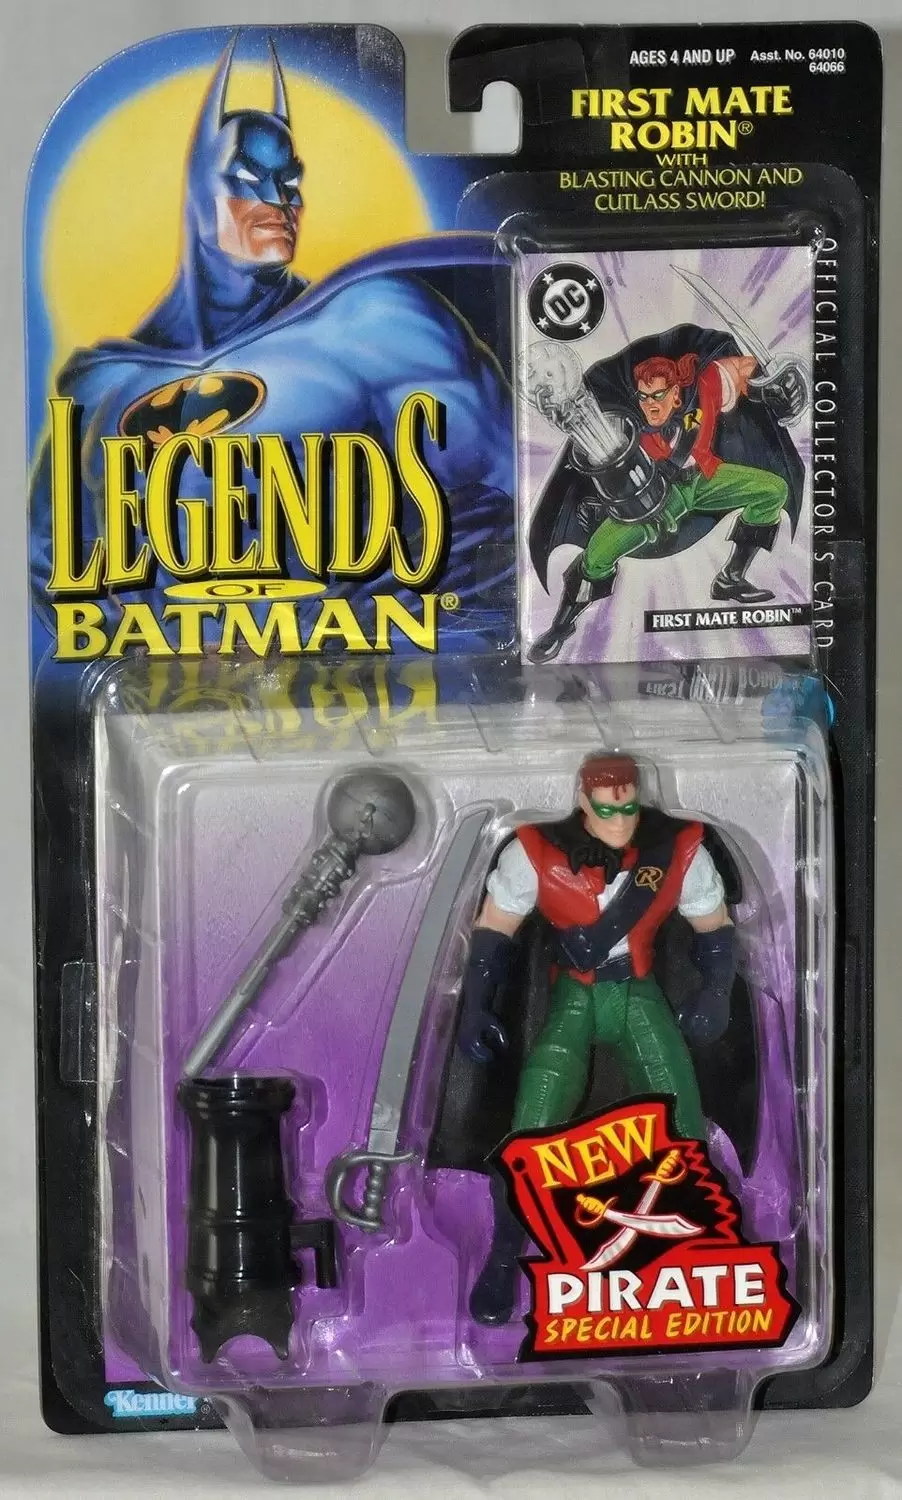 First Mate Robin - Legends of the Batman action figure